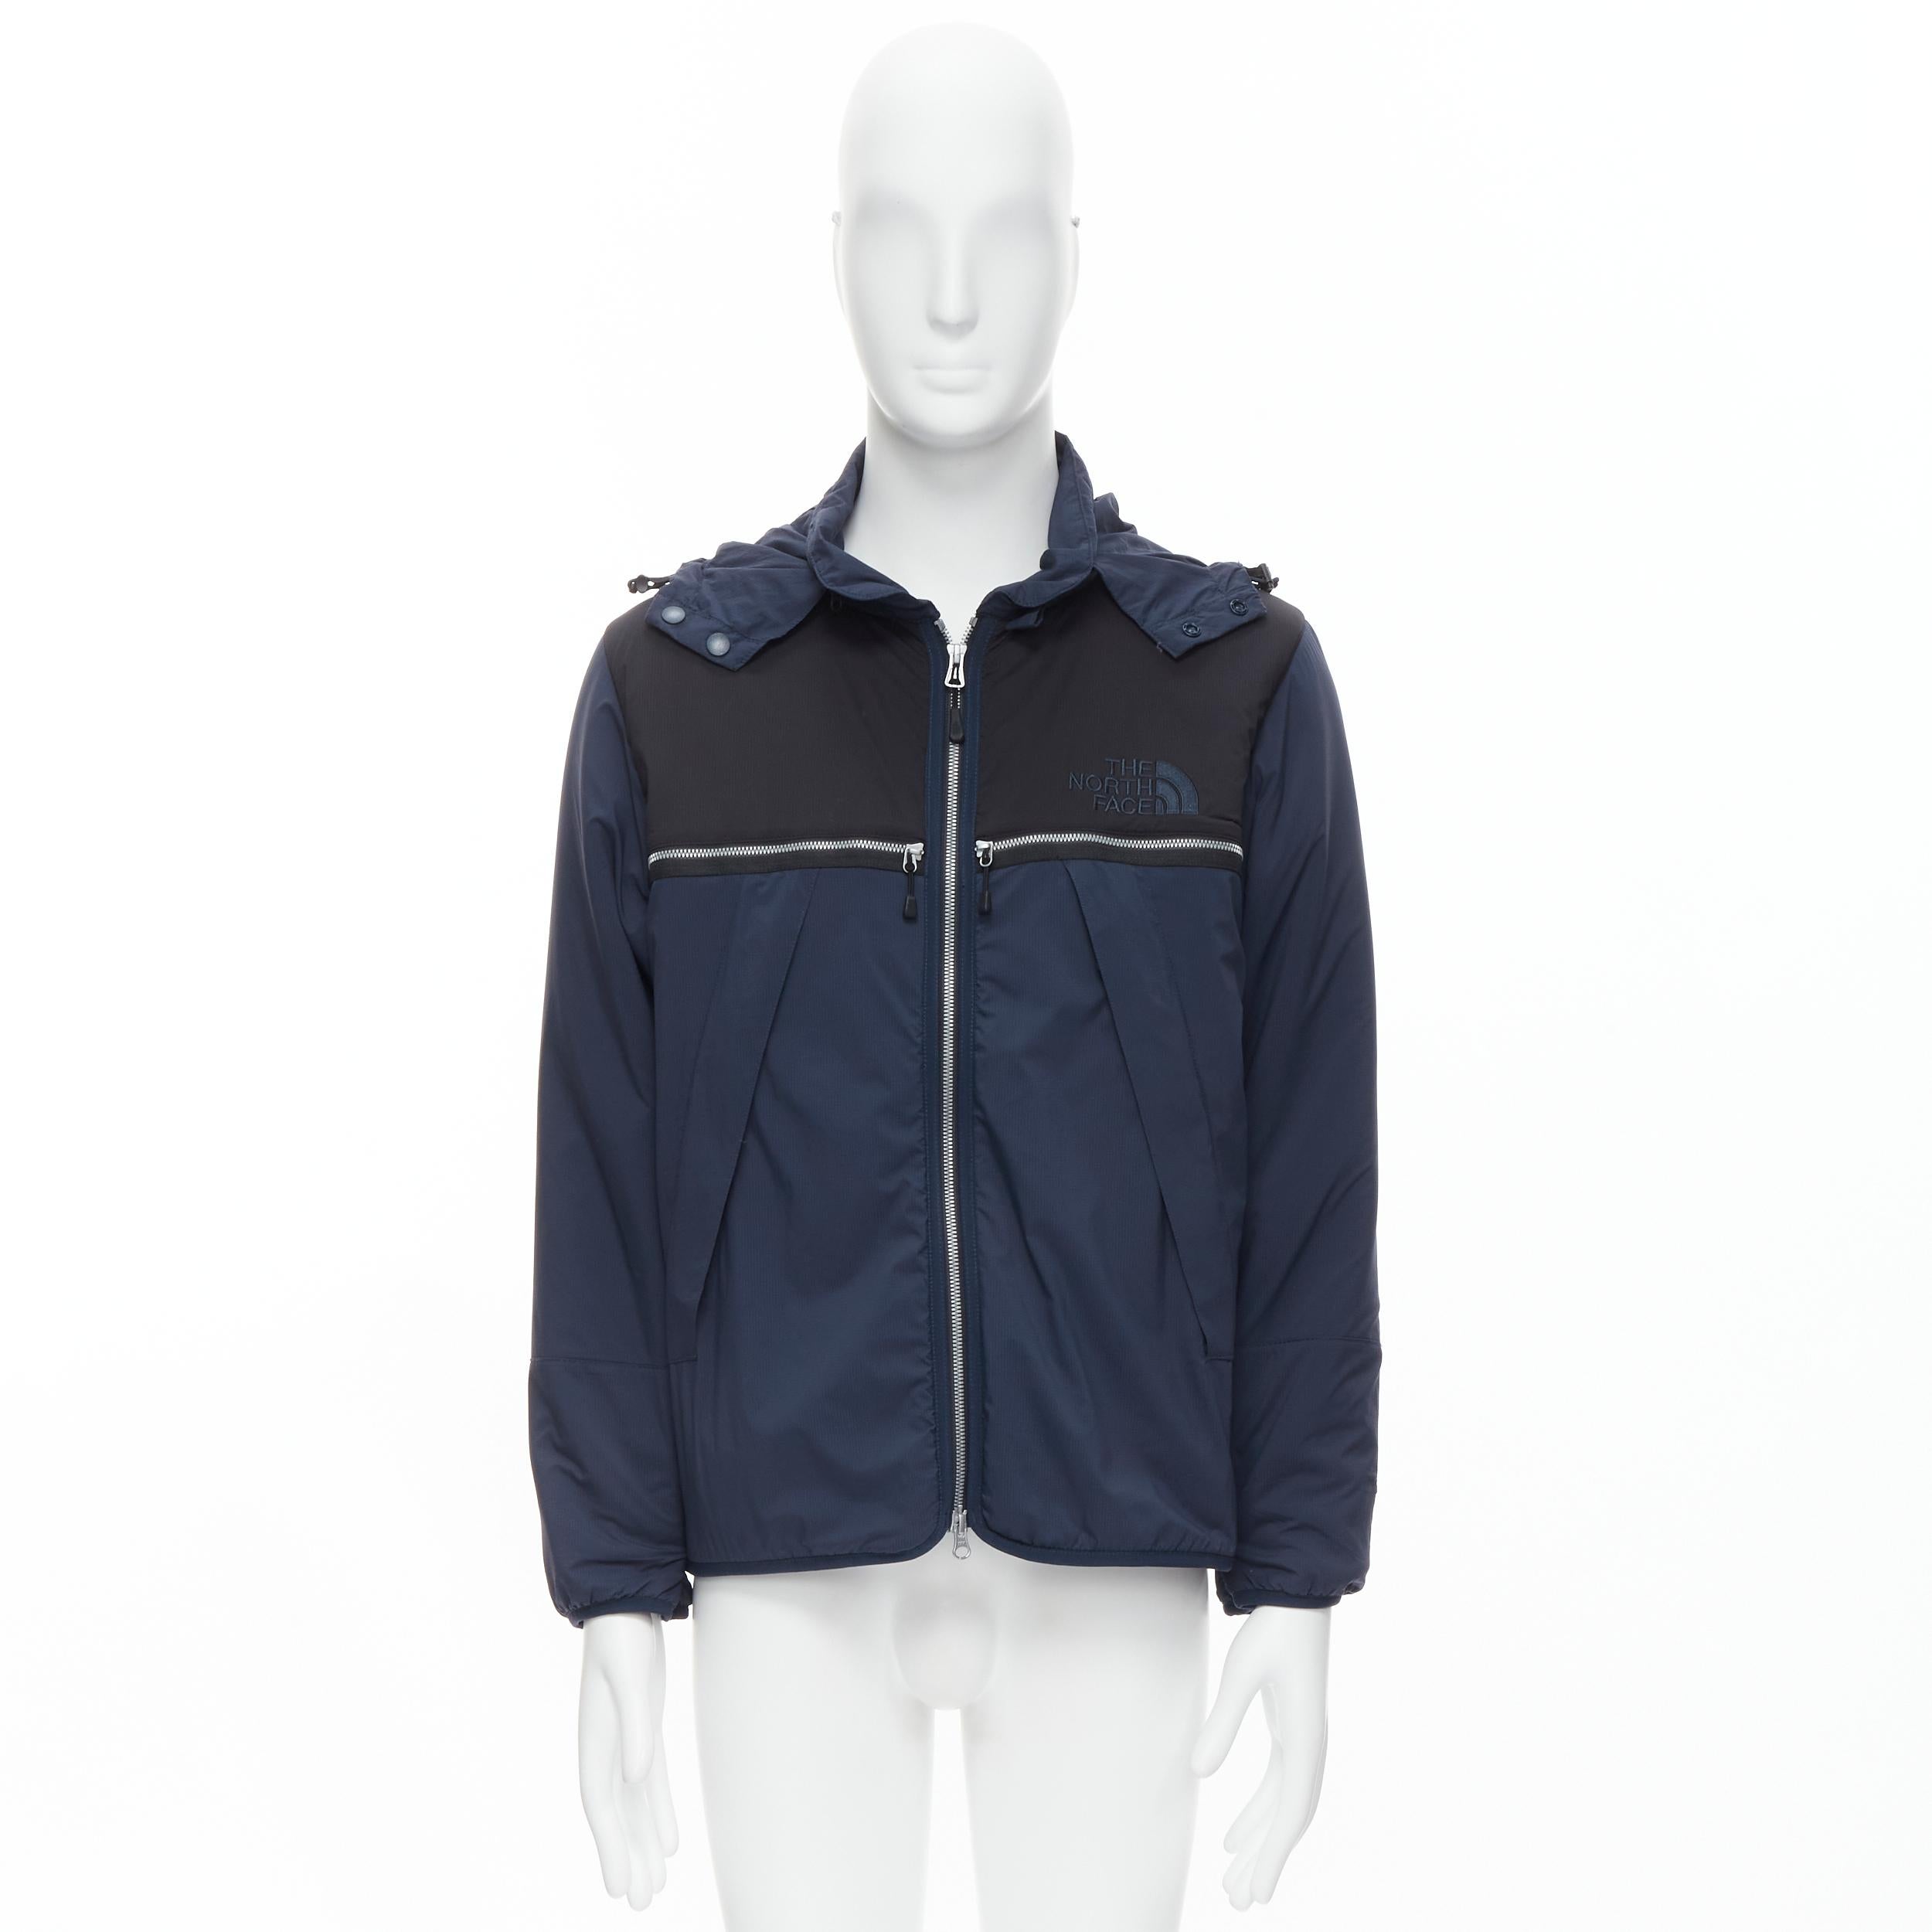 new THE NORTH FACE KK Fleece Work Urban Explore Polartec fleece jacket XS S For Sale 3